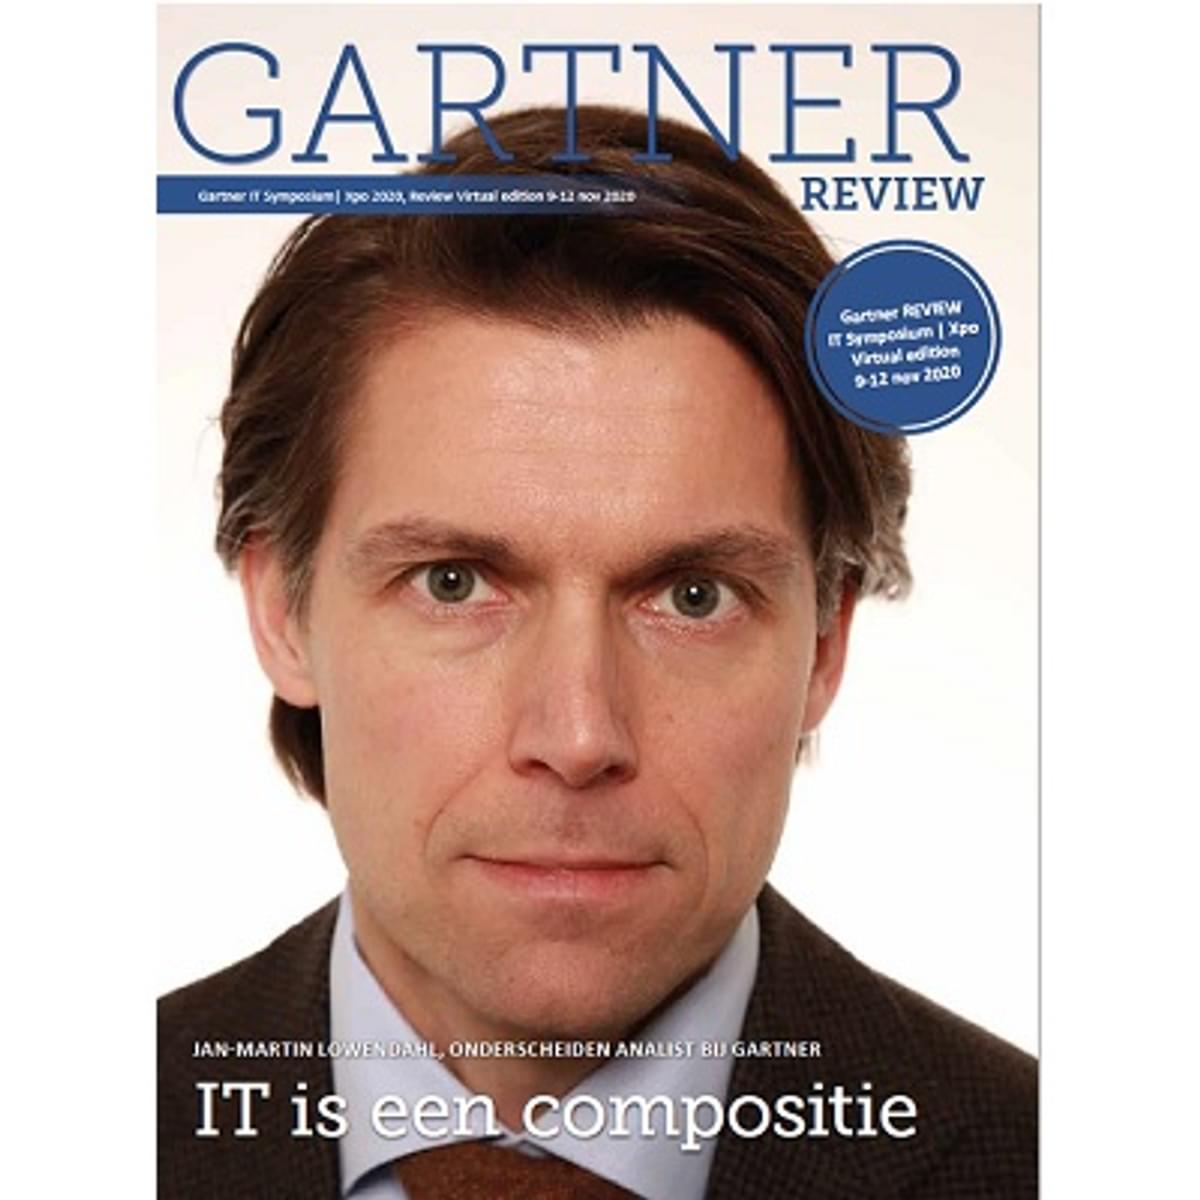 Dutch IT Channel Review Gartner Symposium IT Xpo virtual edition image